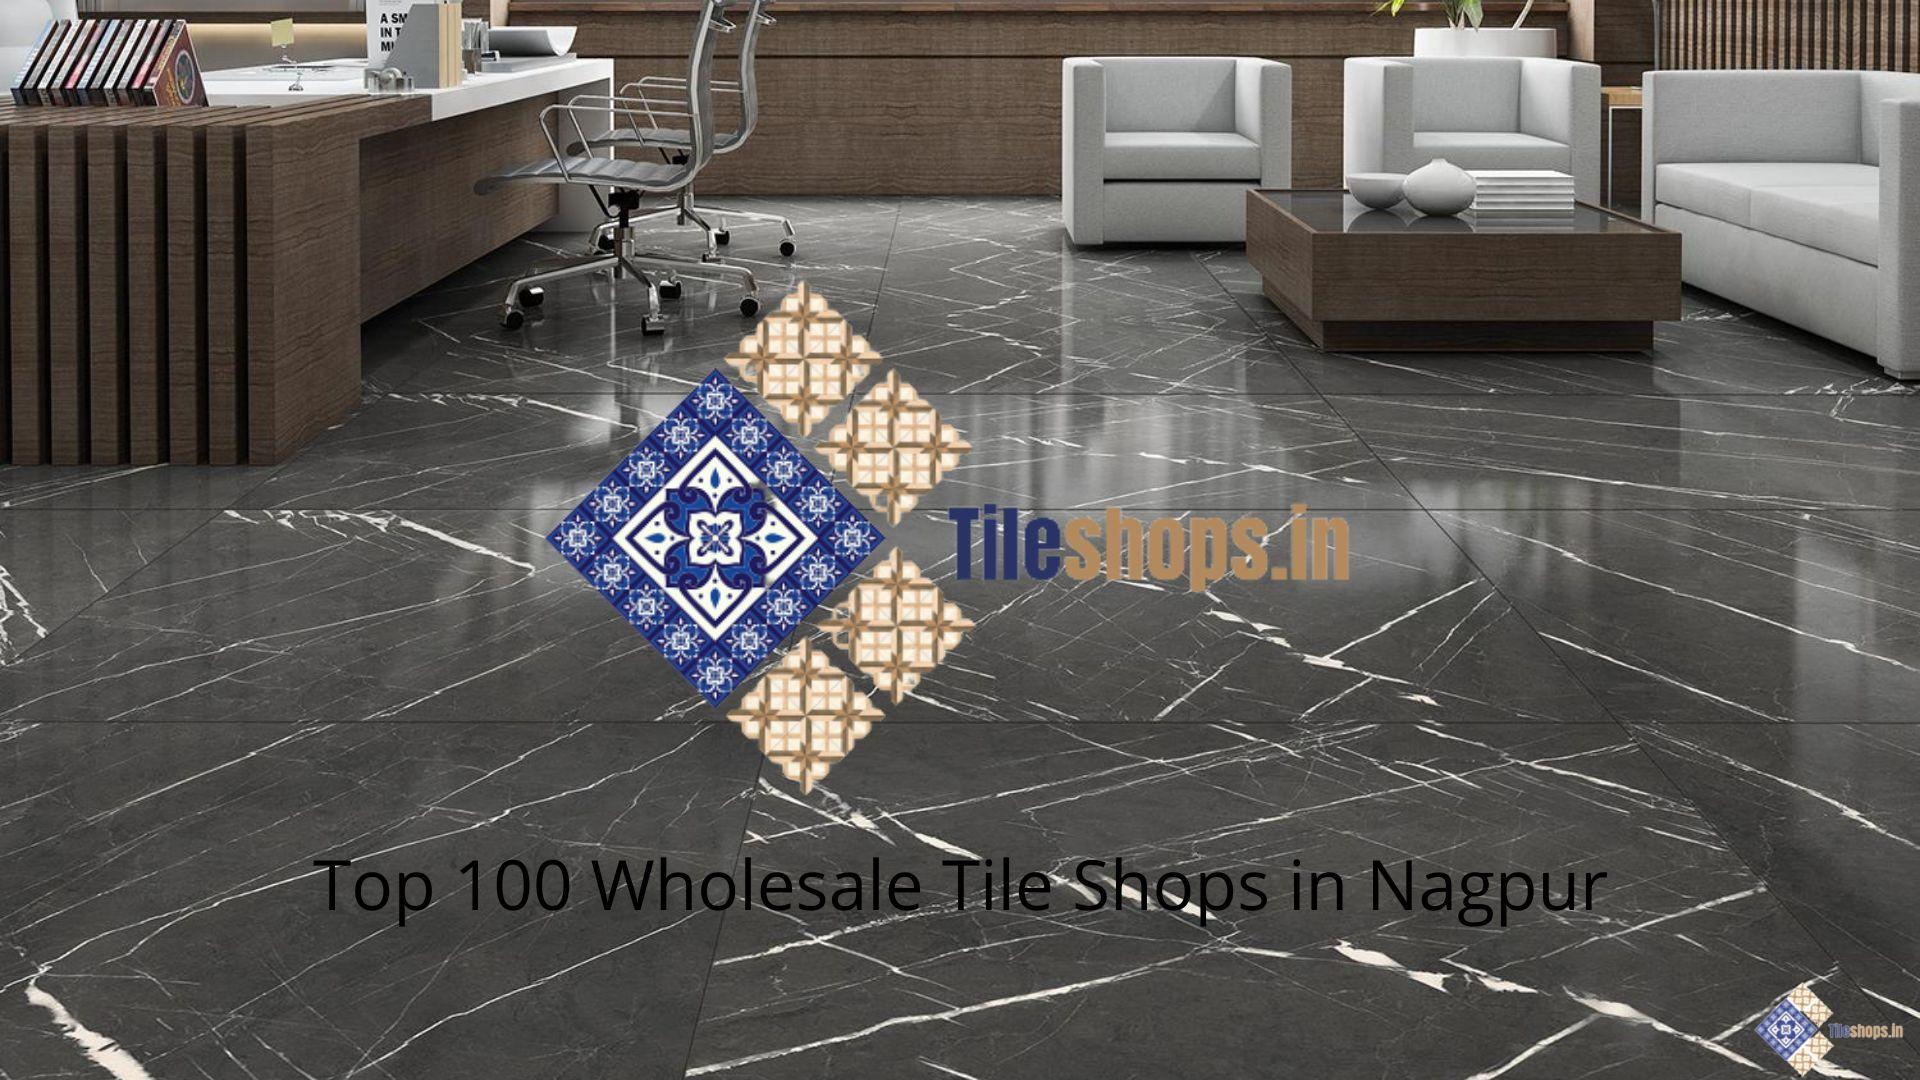 Top 100 Wholesale Tile Shops in Nagpur